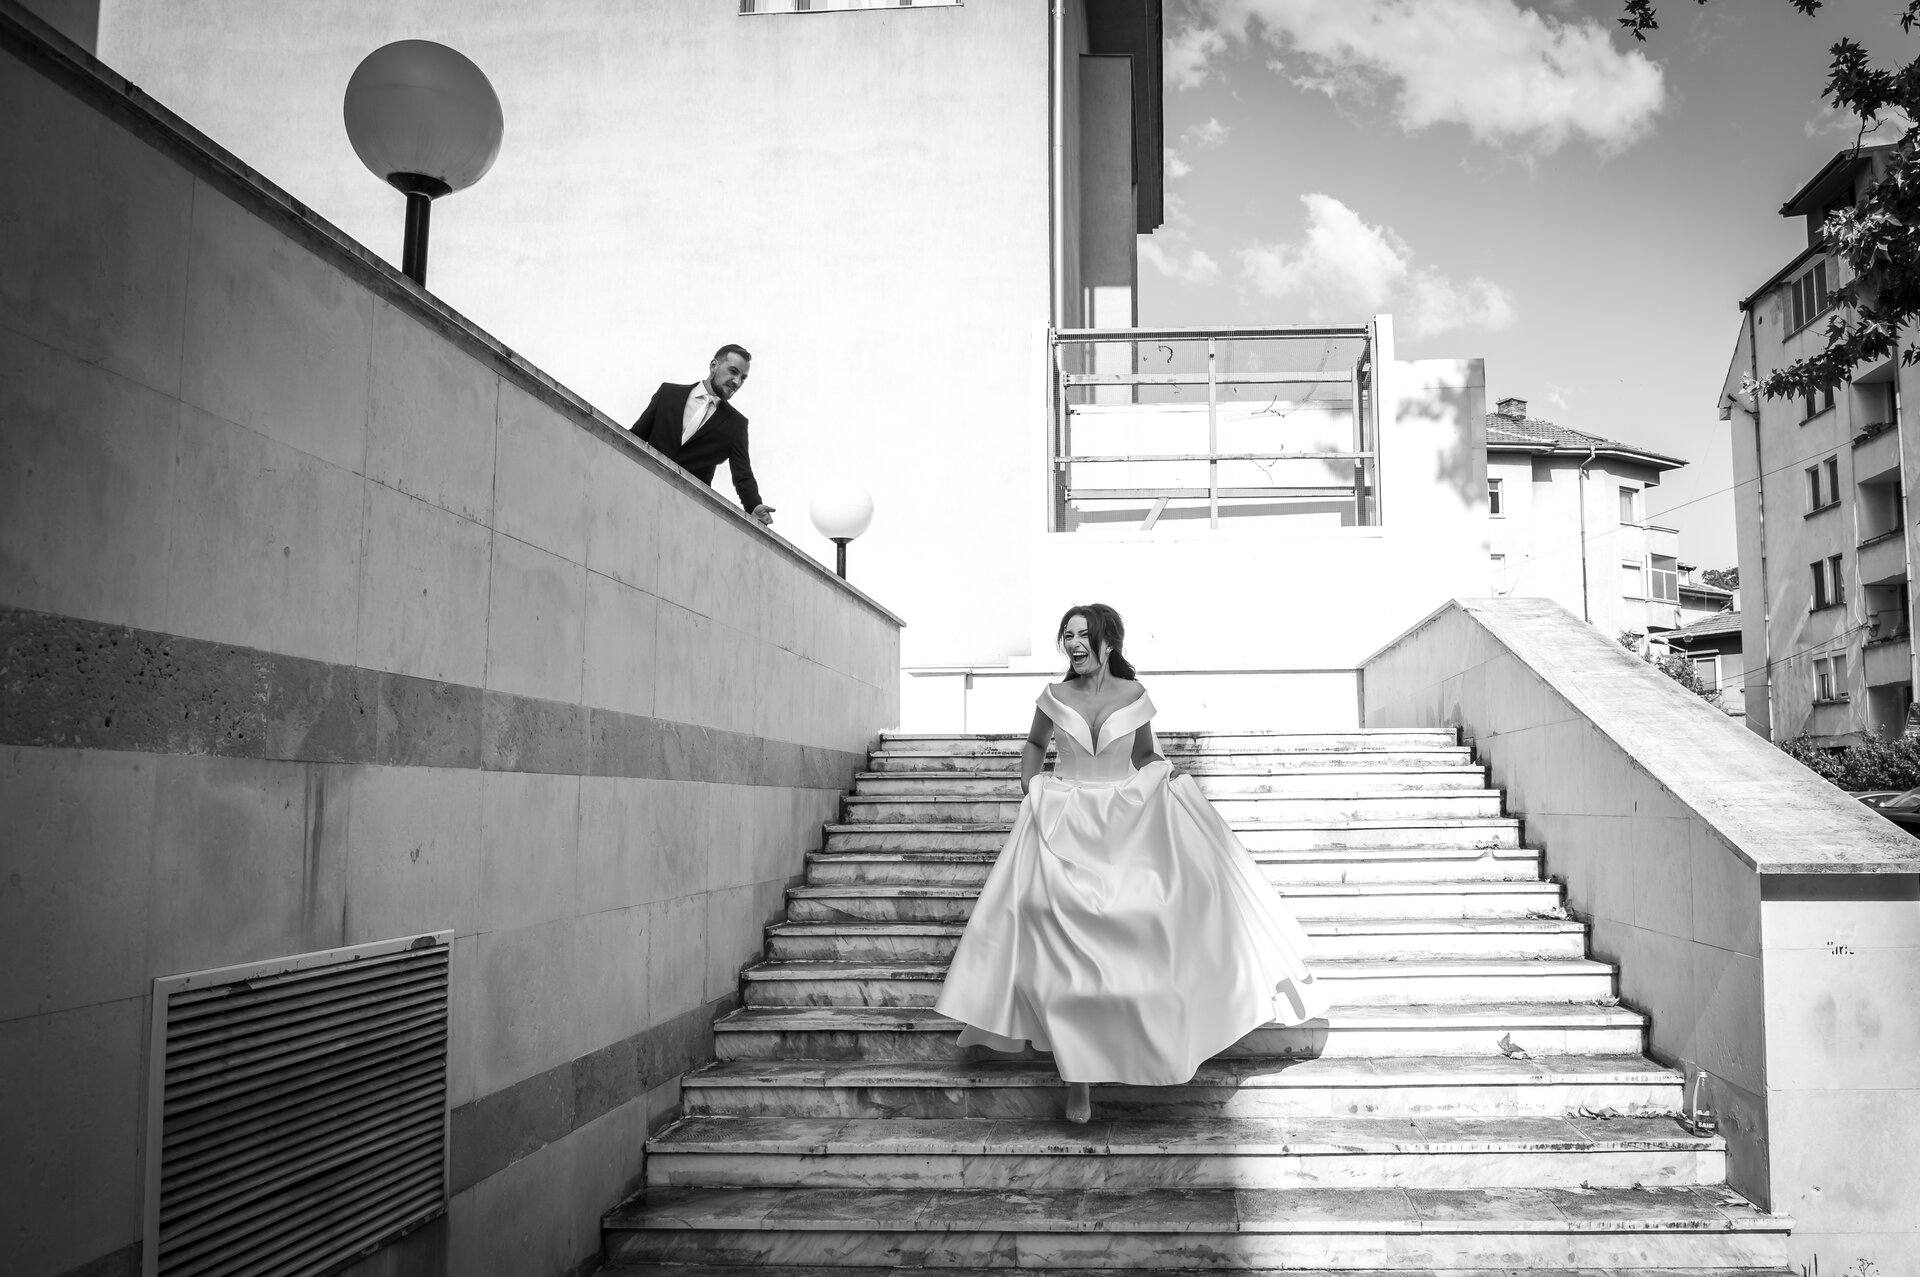 Photo in Wedding | Author Nikola Zafirov - starswriter | PHOTO FORUM